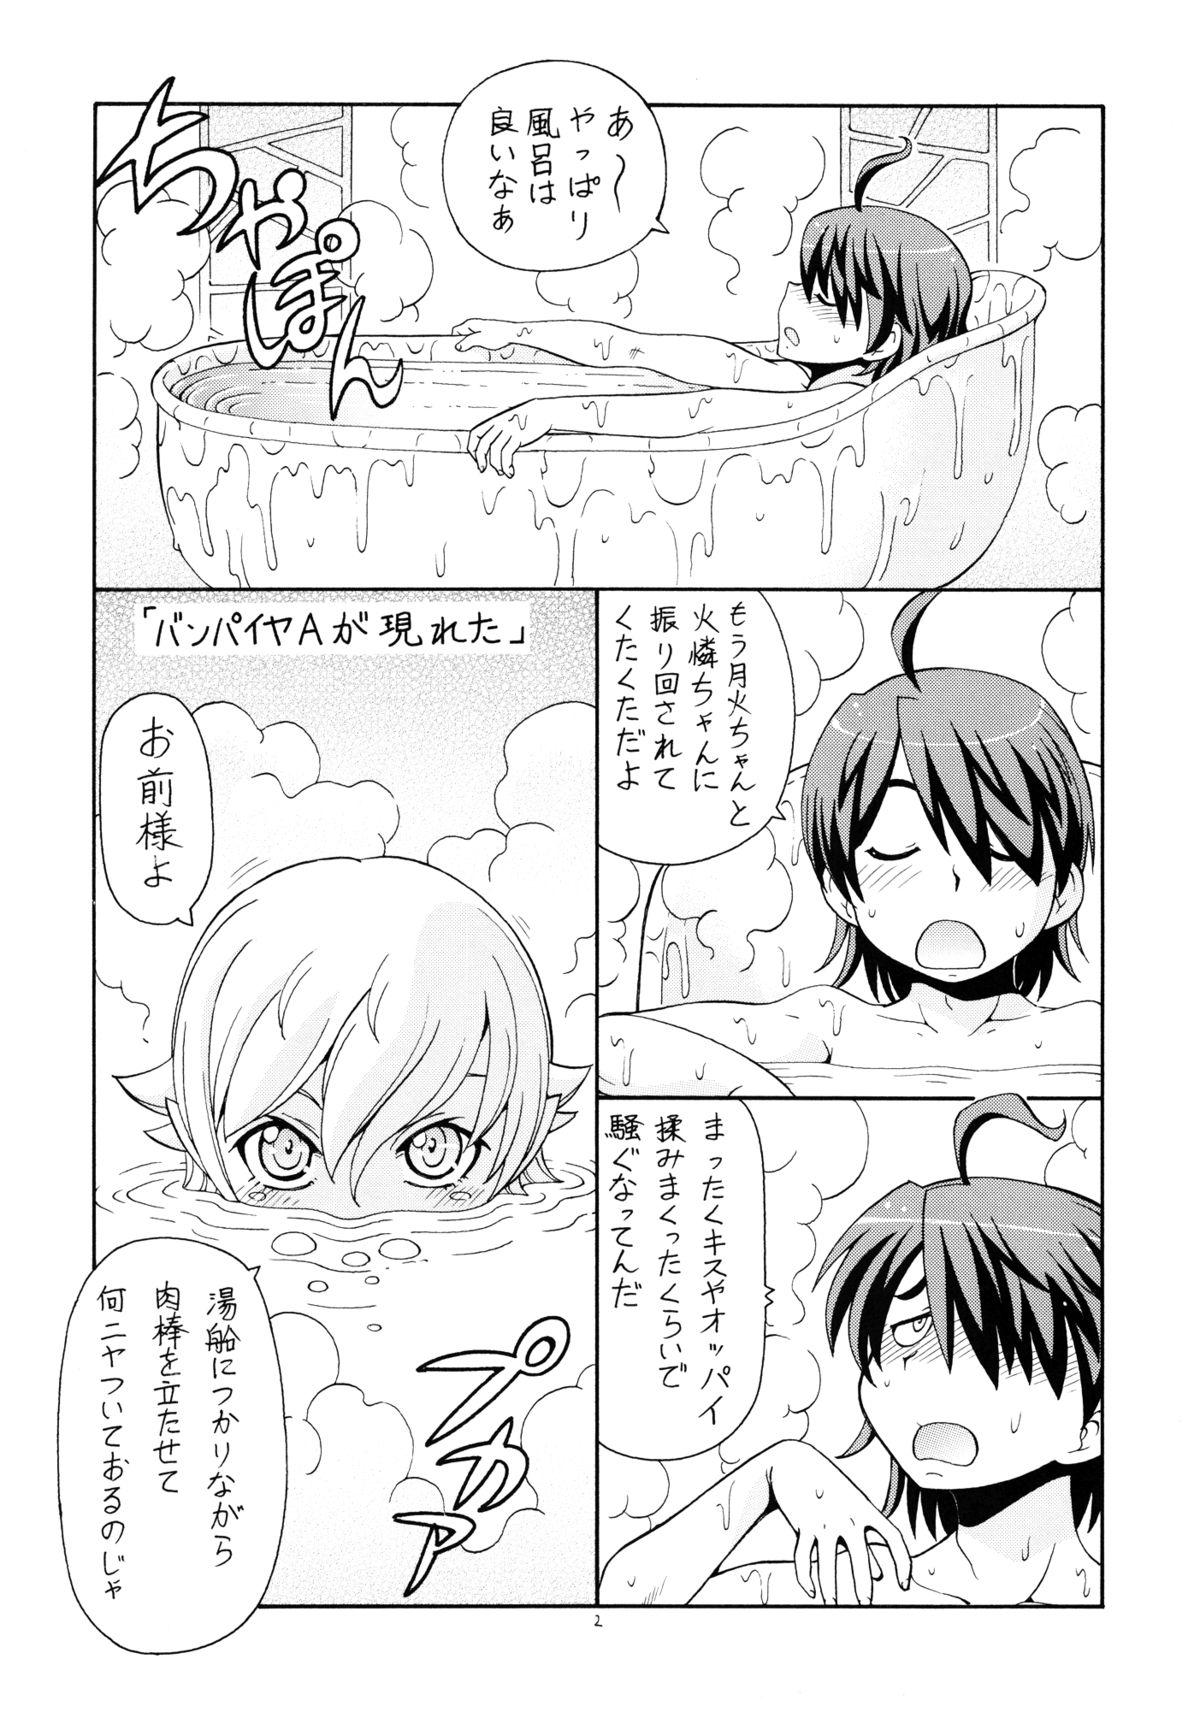 Virginity Hito ni Hakanai to Kaite "Araragi" to Yomu 5&6 - Bakemonogatari Massage - Page 3